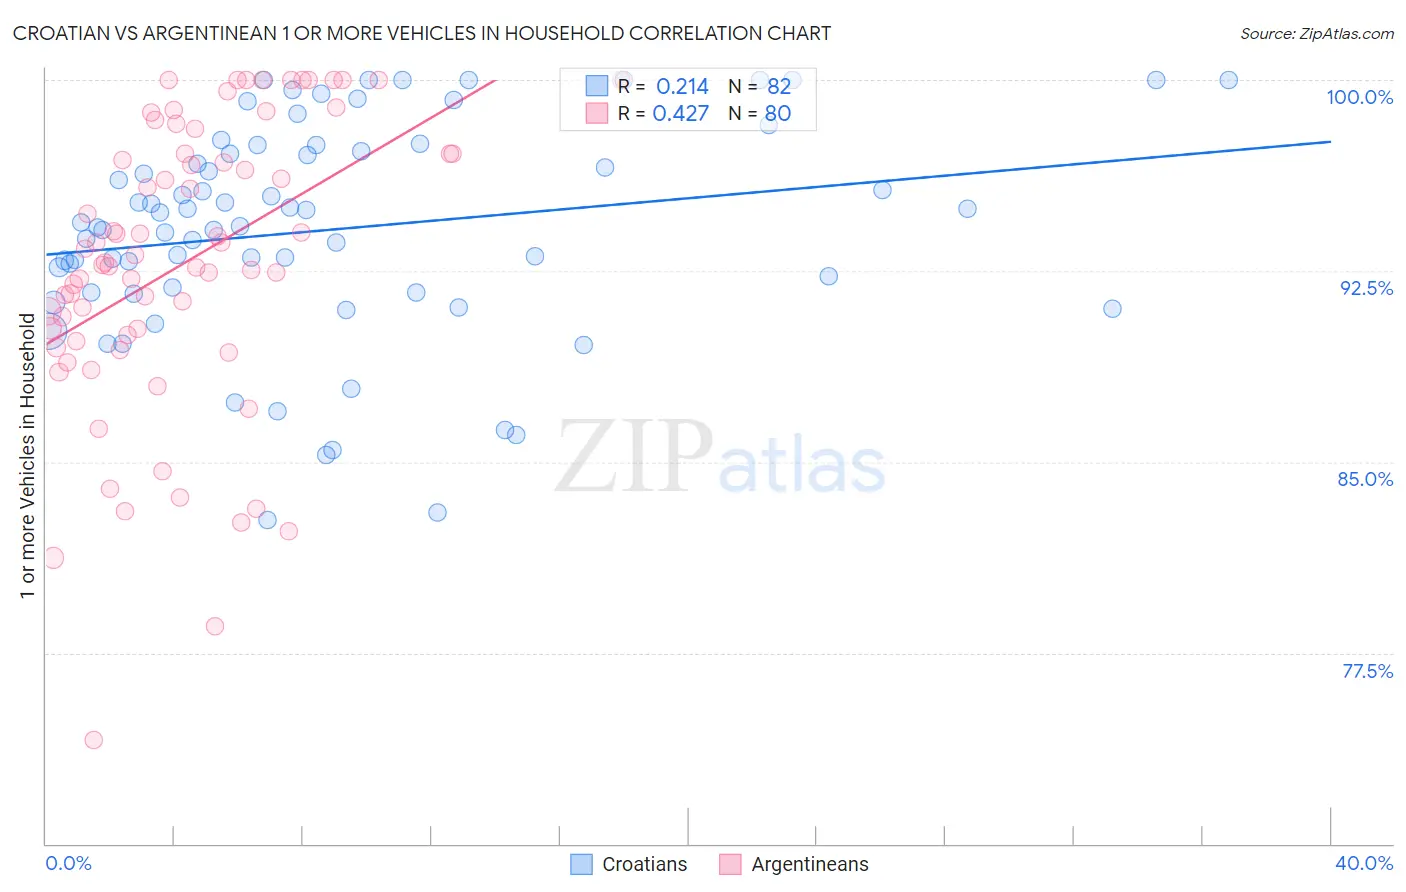 Croatian vs Argentinean 1 or more Vehicles in Household